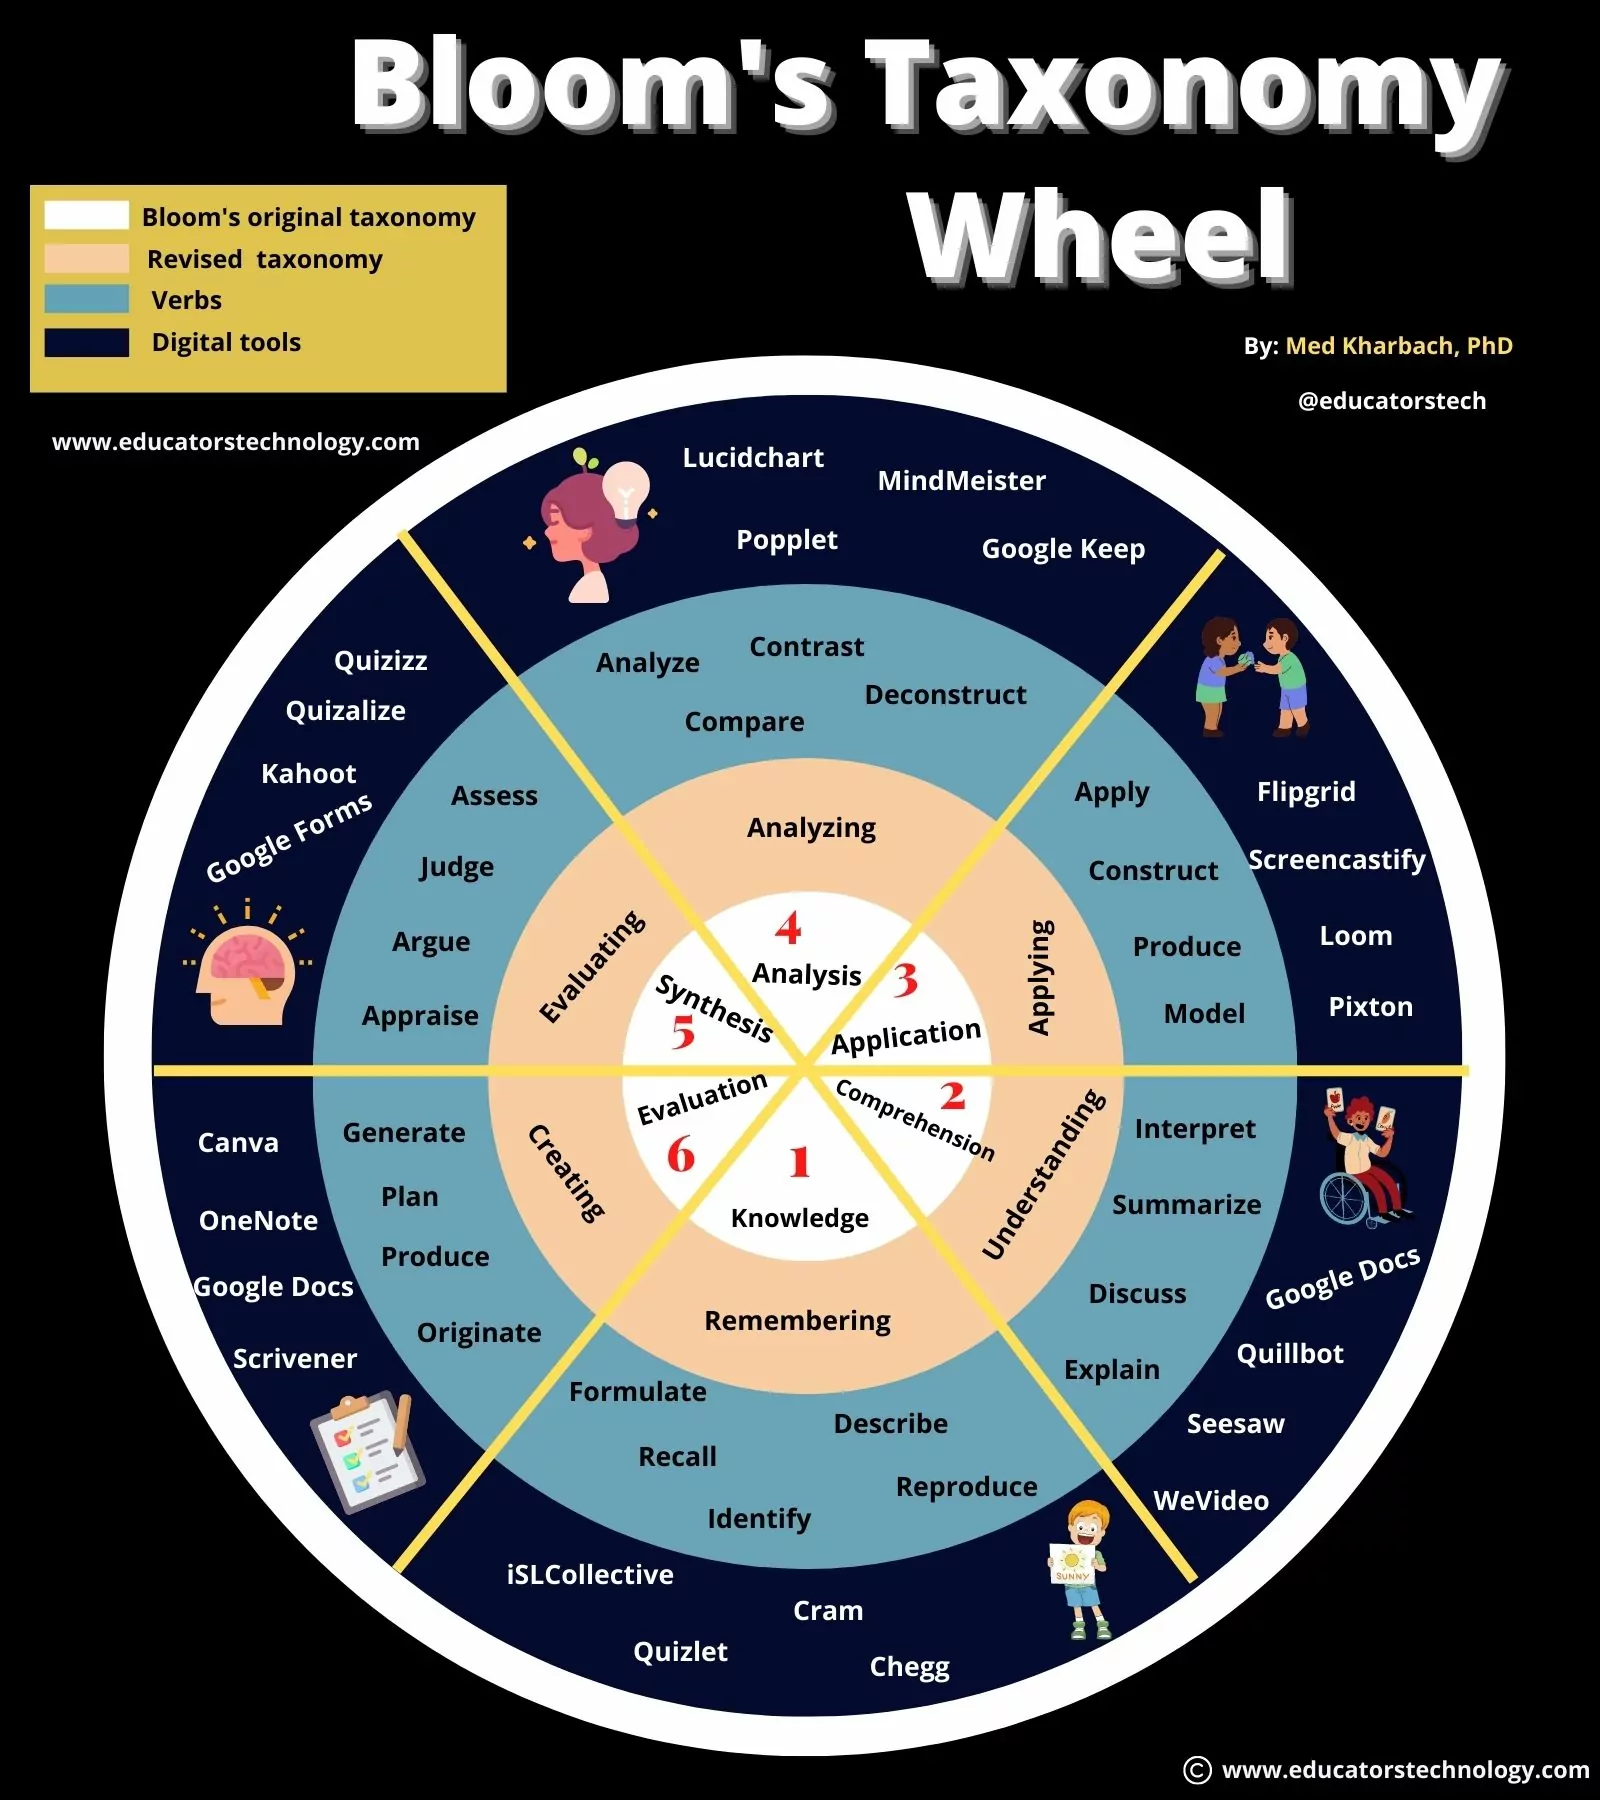 Bloom's taxonomy wheel